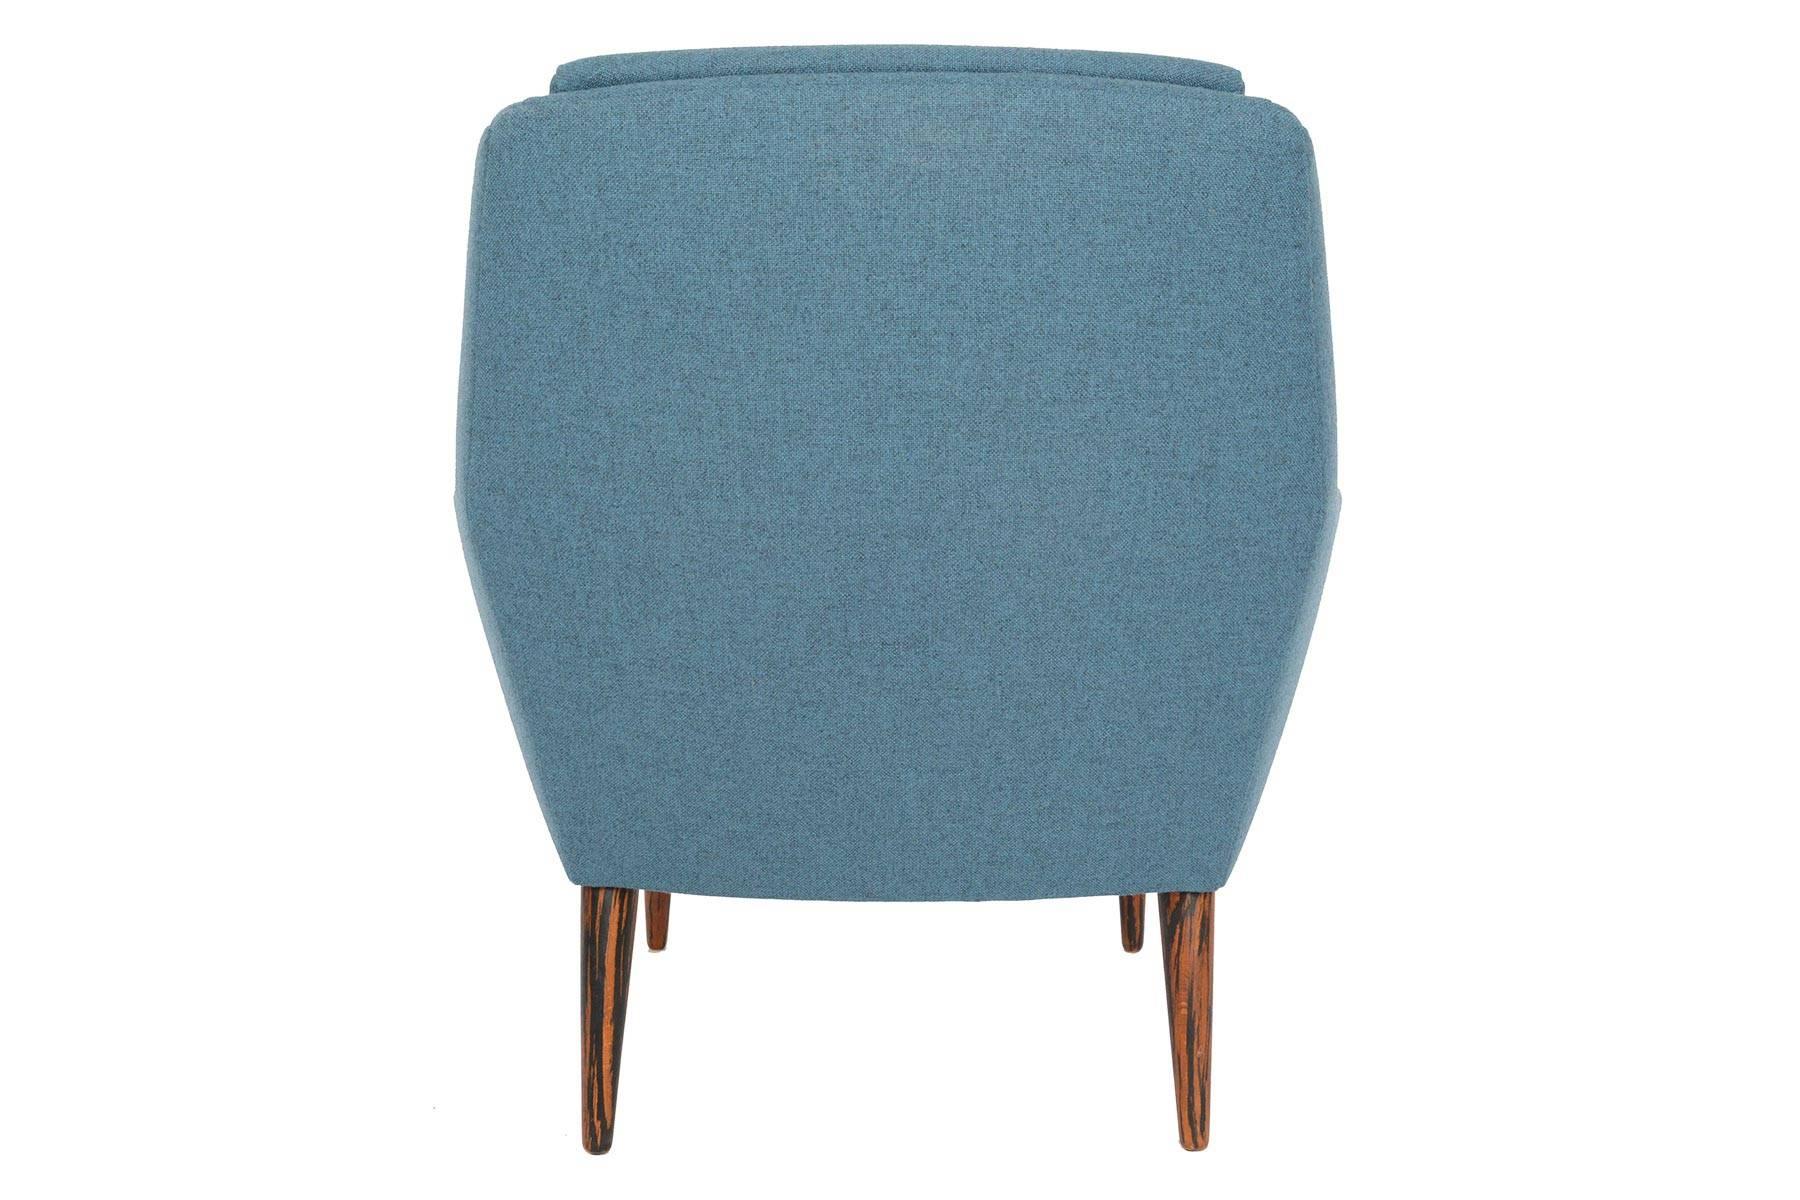 Mid-20th Century Atomic Danish Modern Midcentury Rosewood Lounge Chair in Cerulean Wool